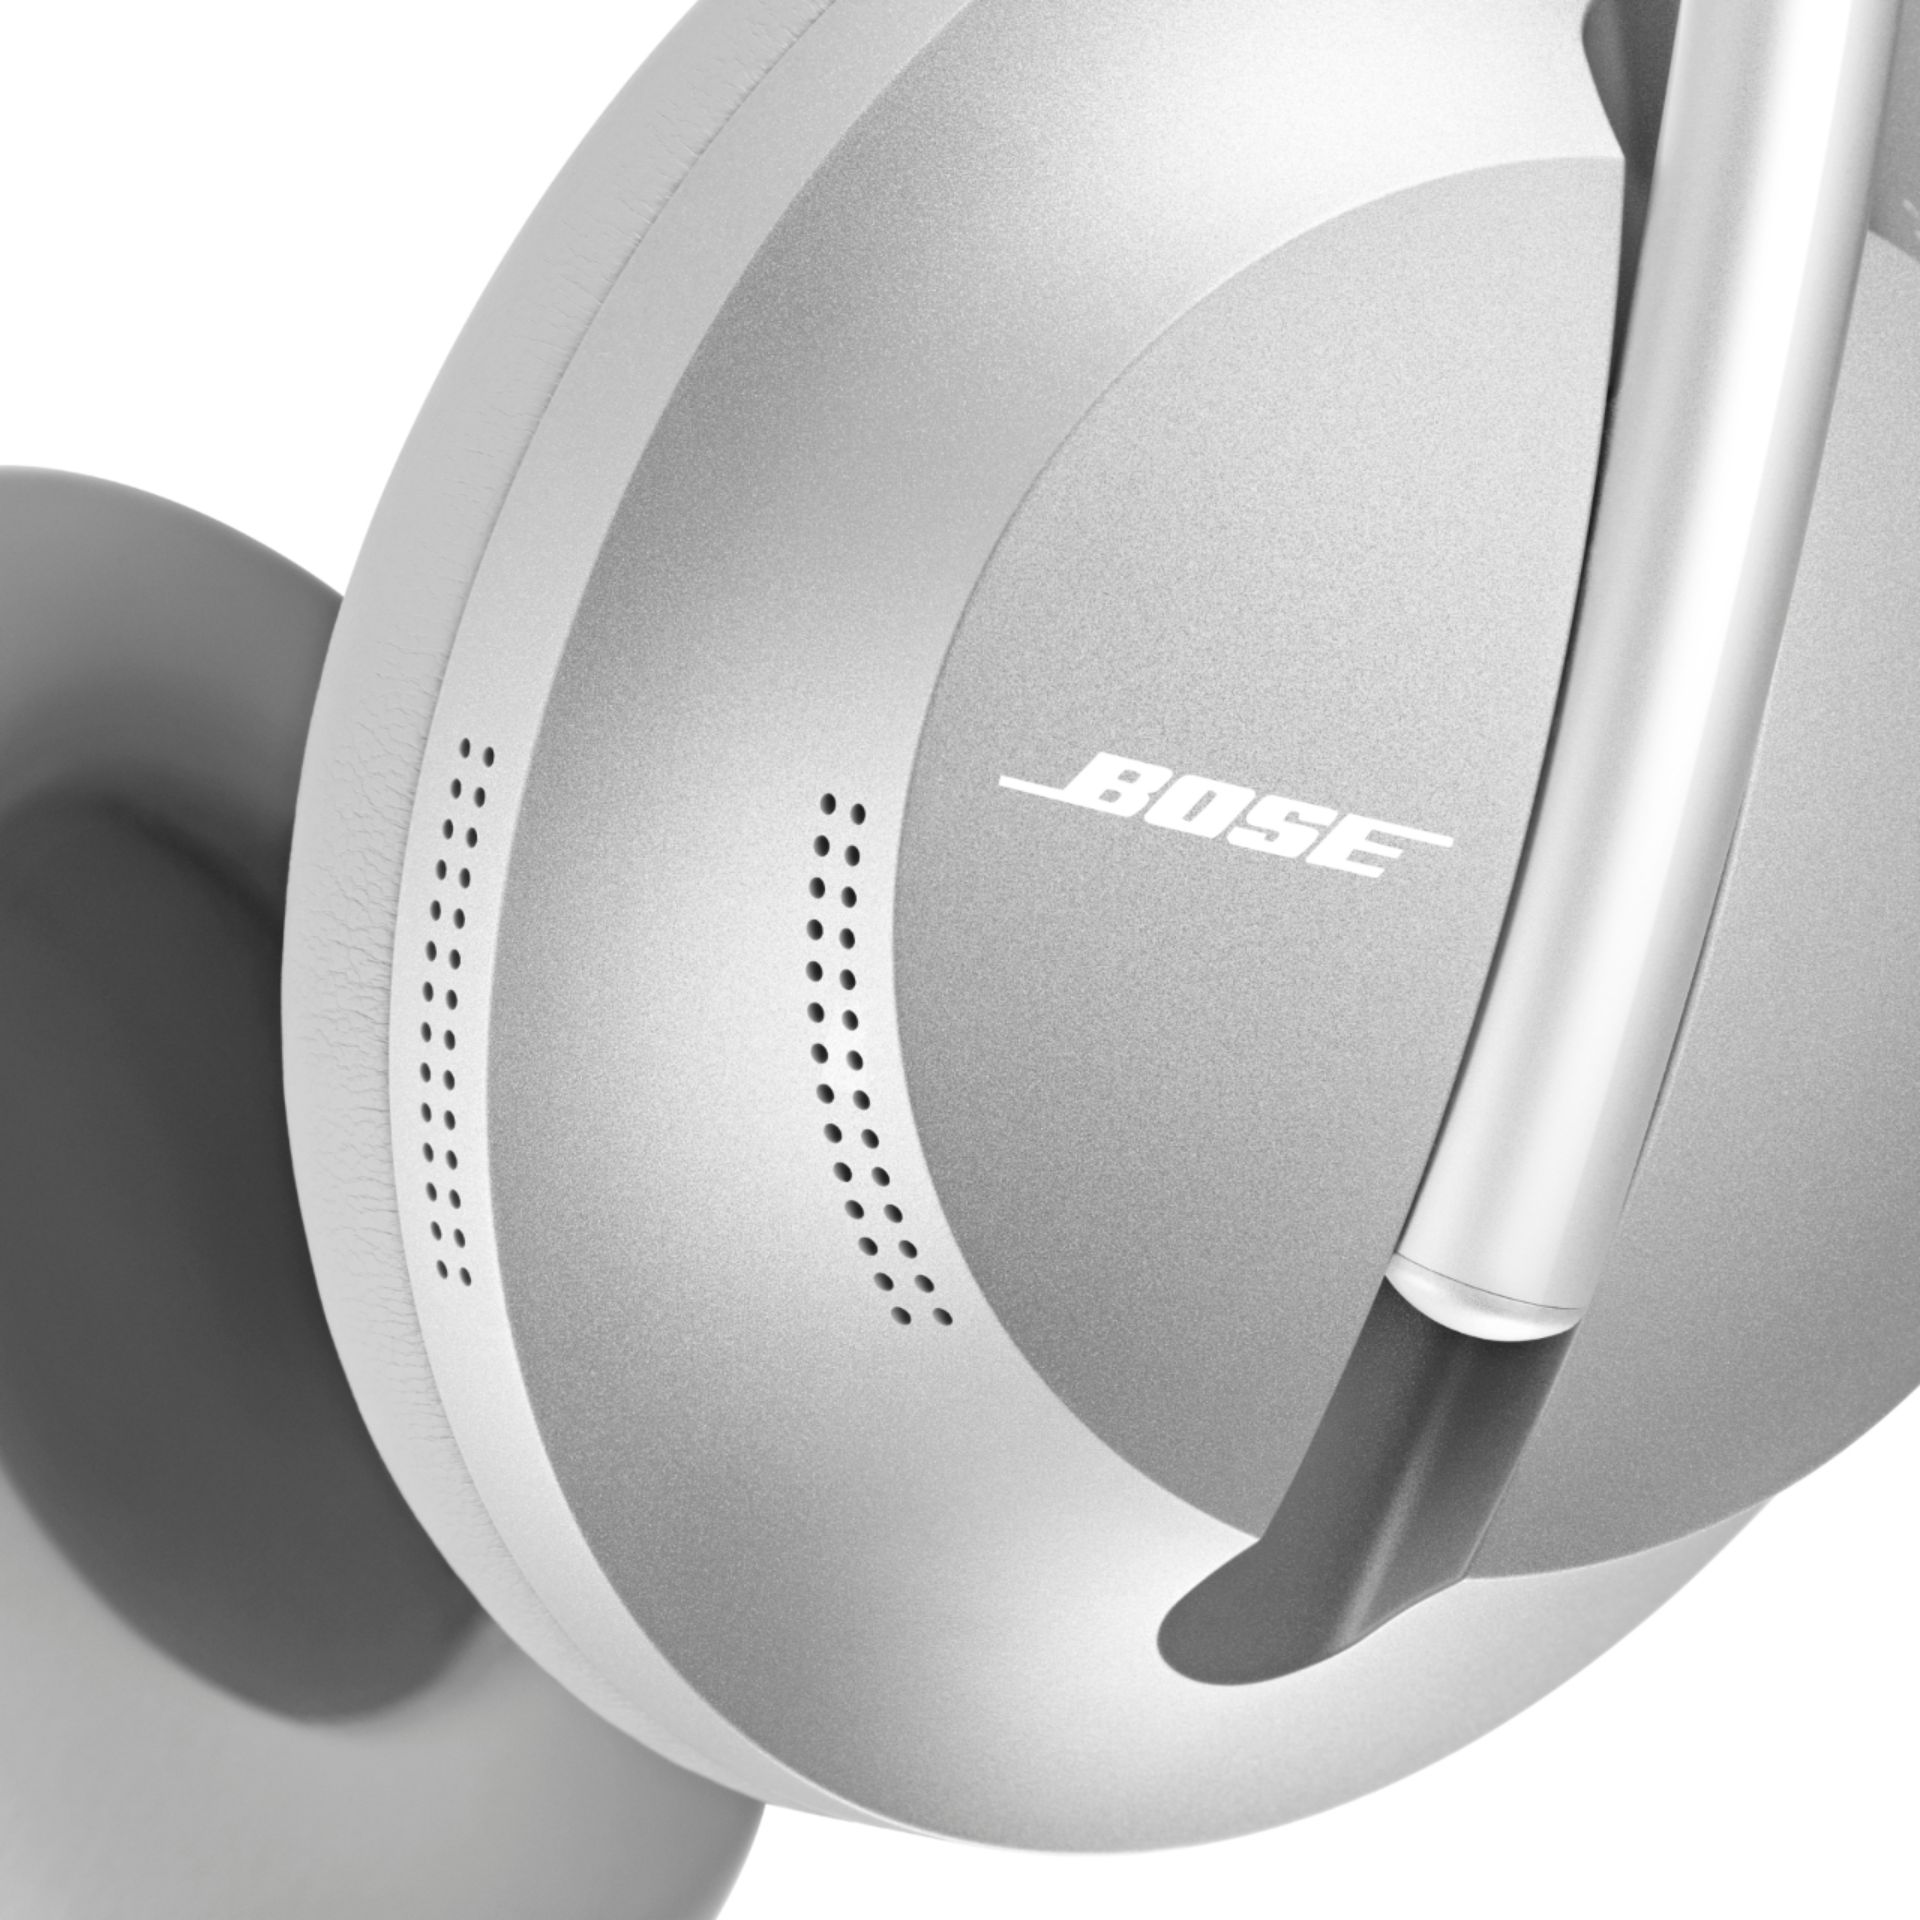 helbrede Virksomhedsbeskrivelse Ventilere Bose Headphones 700 Wireless Noise Cancelling Over-the-Ear Headphones Luxe  Silver 794297-0300 - Best Buy